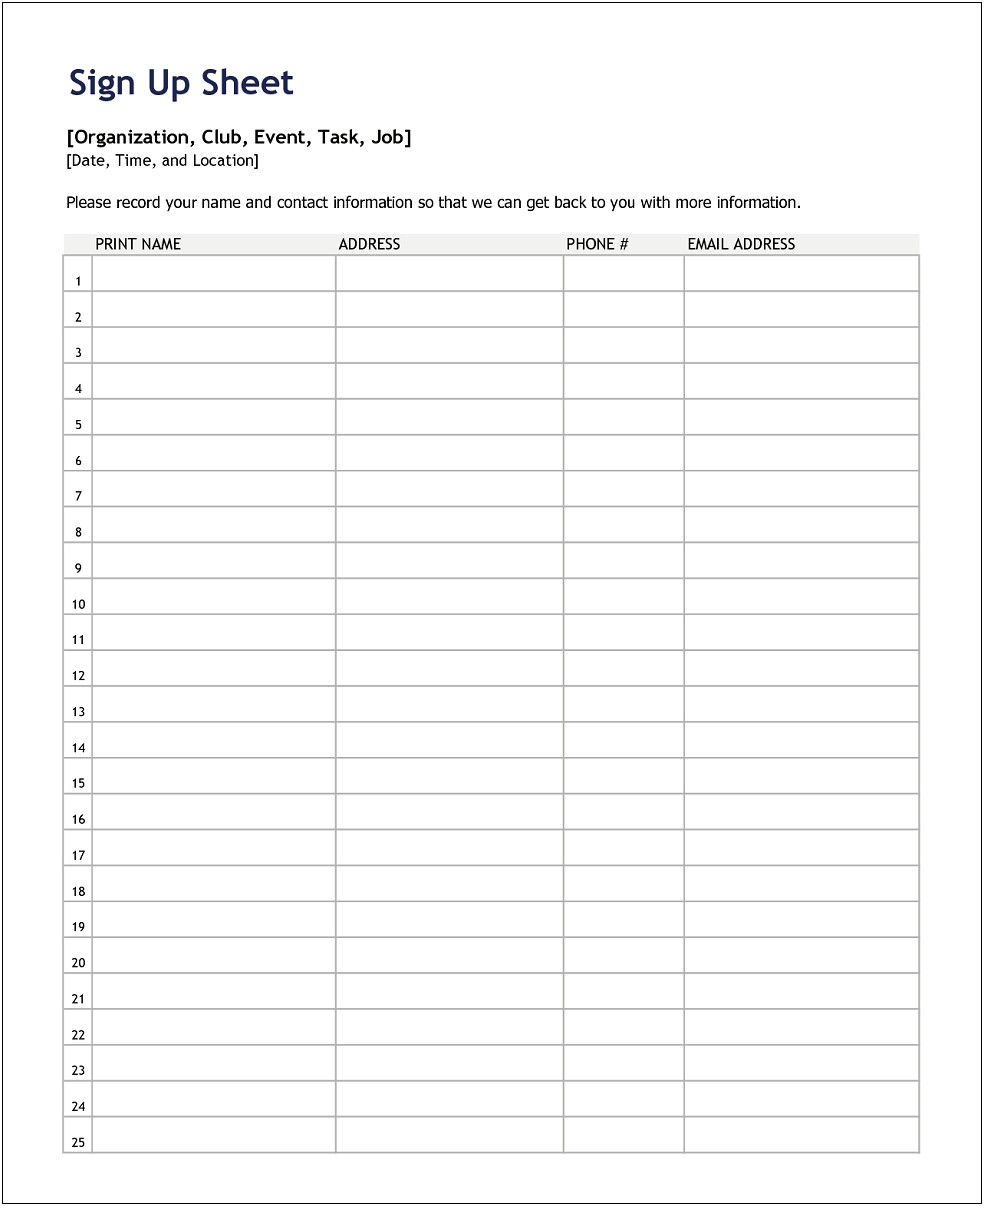 potluck-sign-up-sheet-free-template-templates-resume-designs-evgerpxjqg